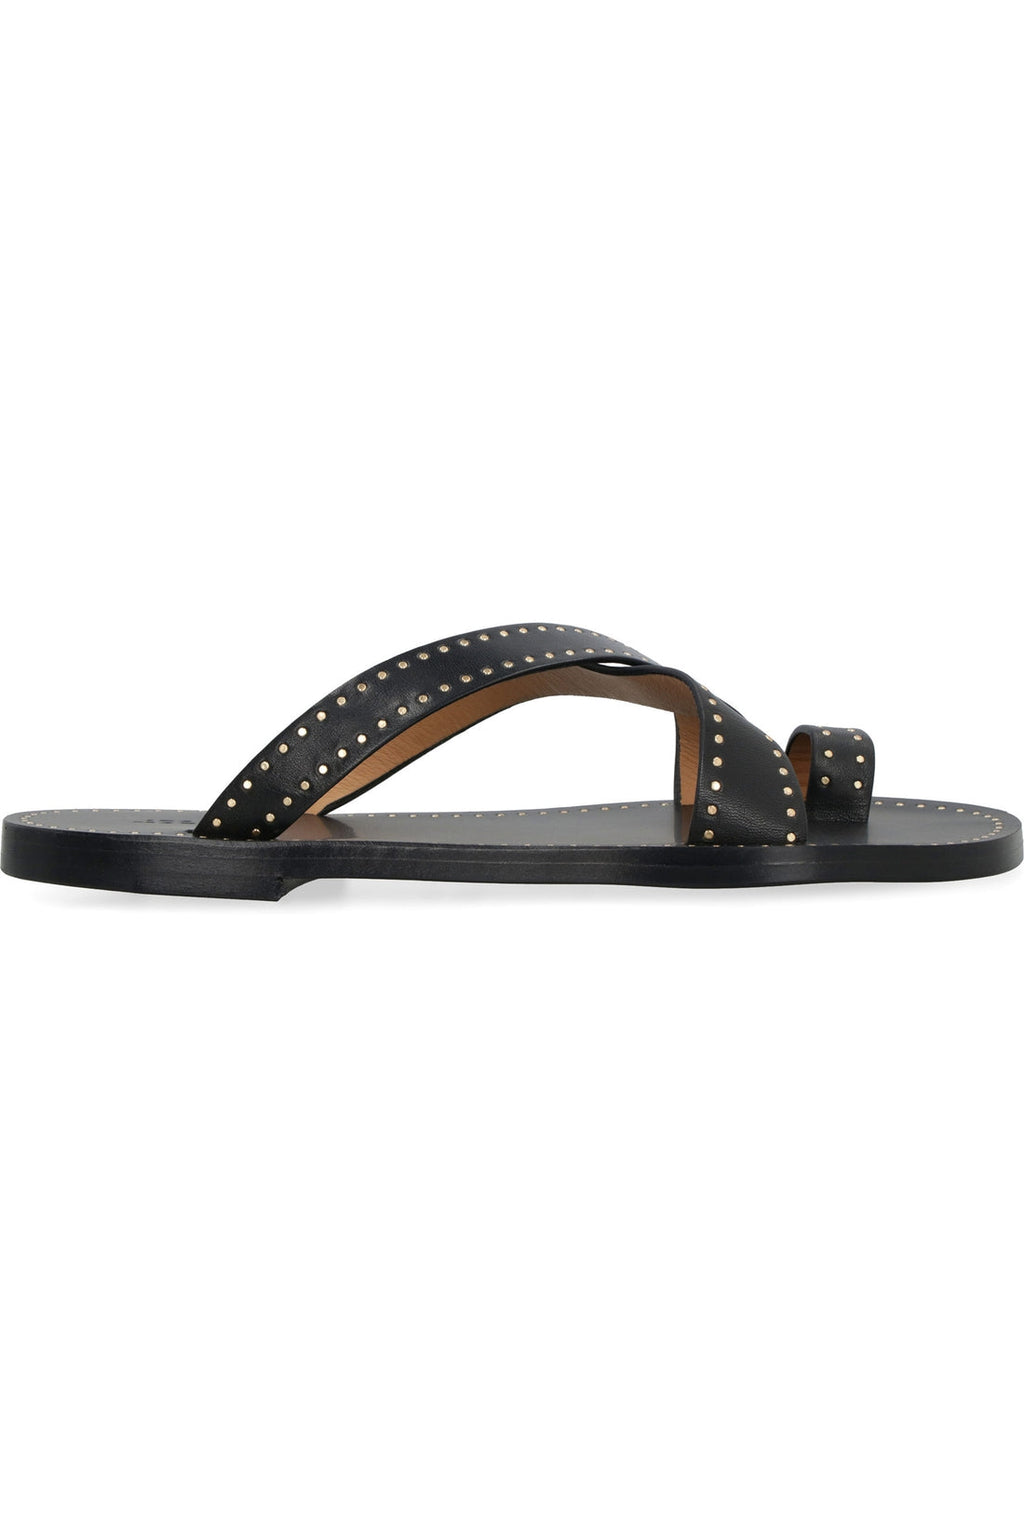 Isabel Marant-OUTLET-SALE-Jinsay leather flat sandals-ARCHIVIST